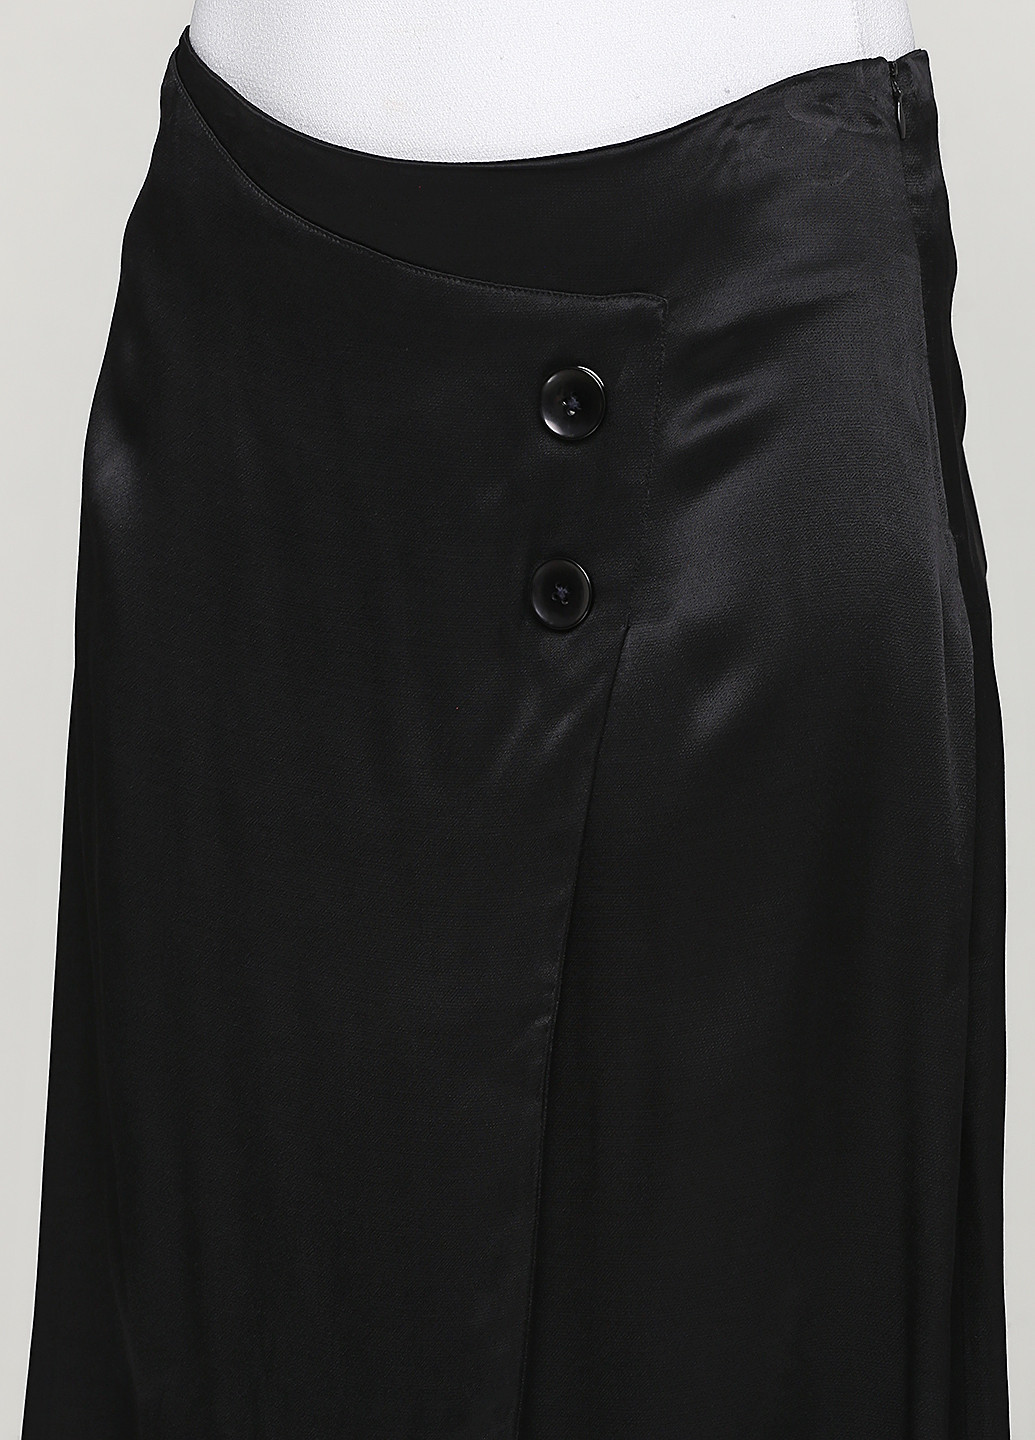 Черная кэжуал однотонная юбка Minus а-силуэта (трапеция)